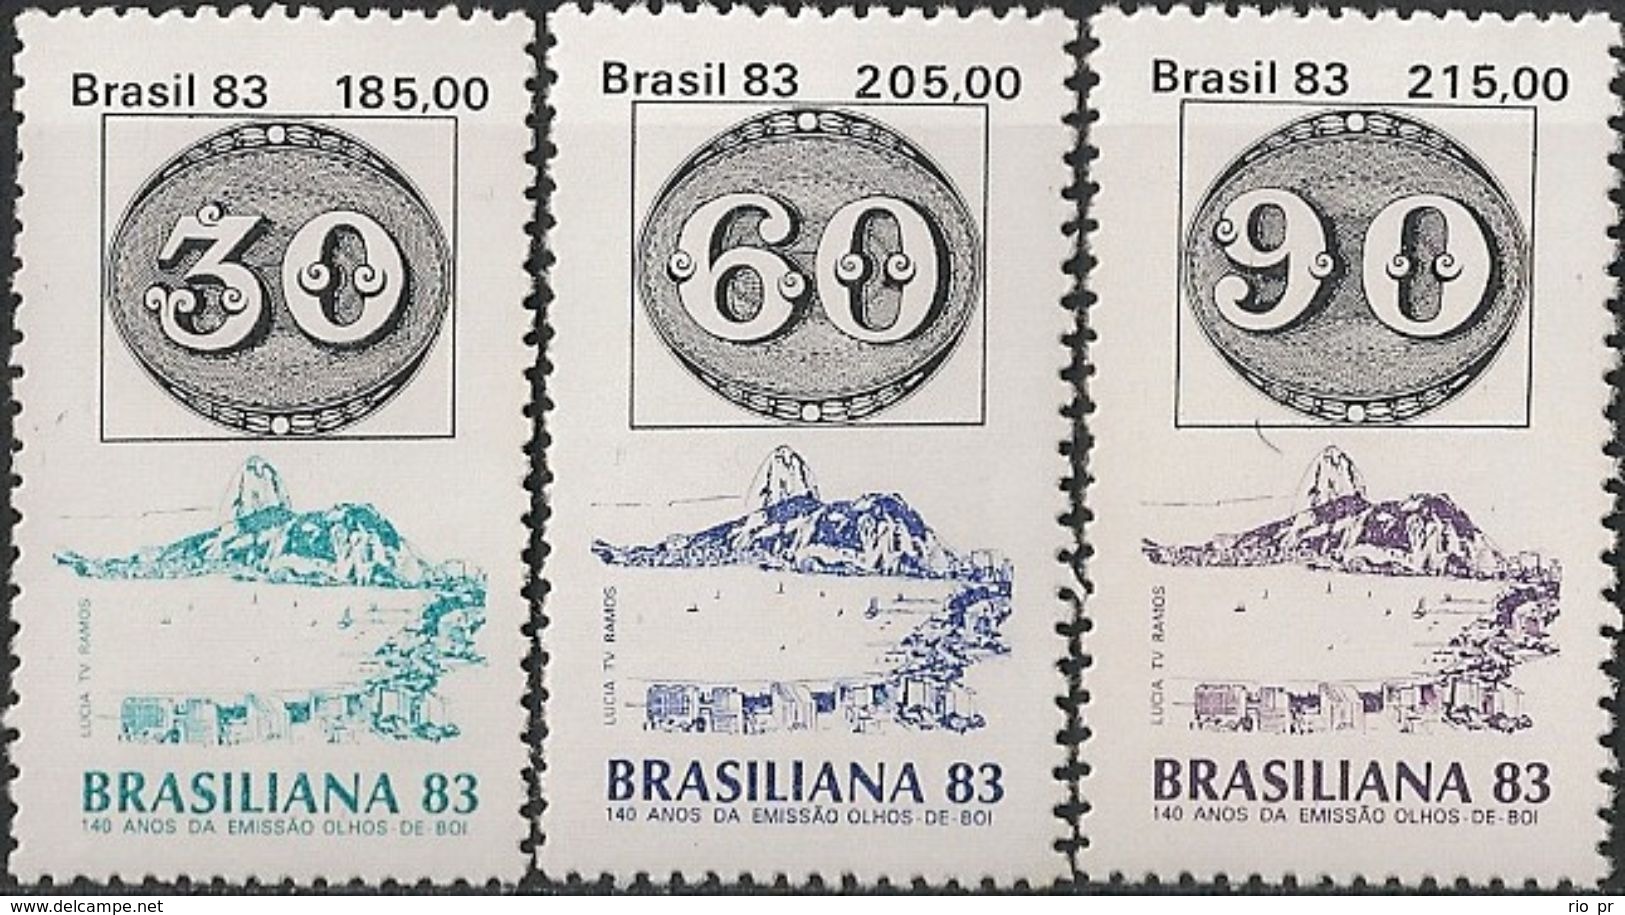 BRAZIL - COMPLETE SET BRASILIANA'83, RIO DE JANEIRO (BULL'S EYES STAMPS) 1983 - MNH - Expositions Philatéliques